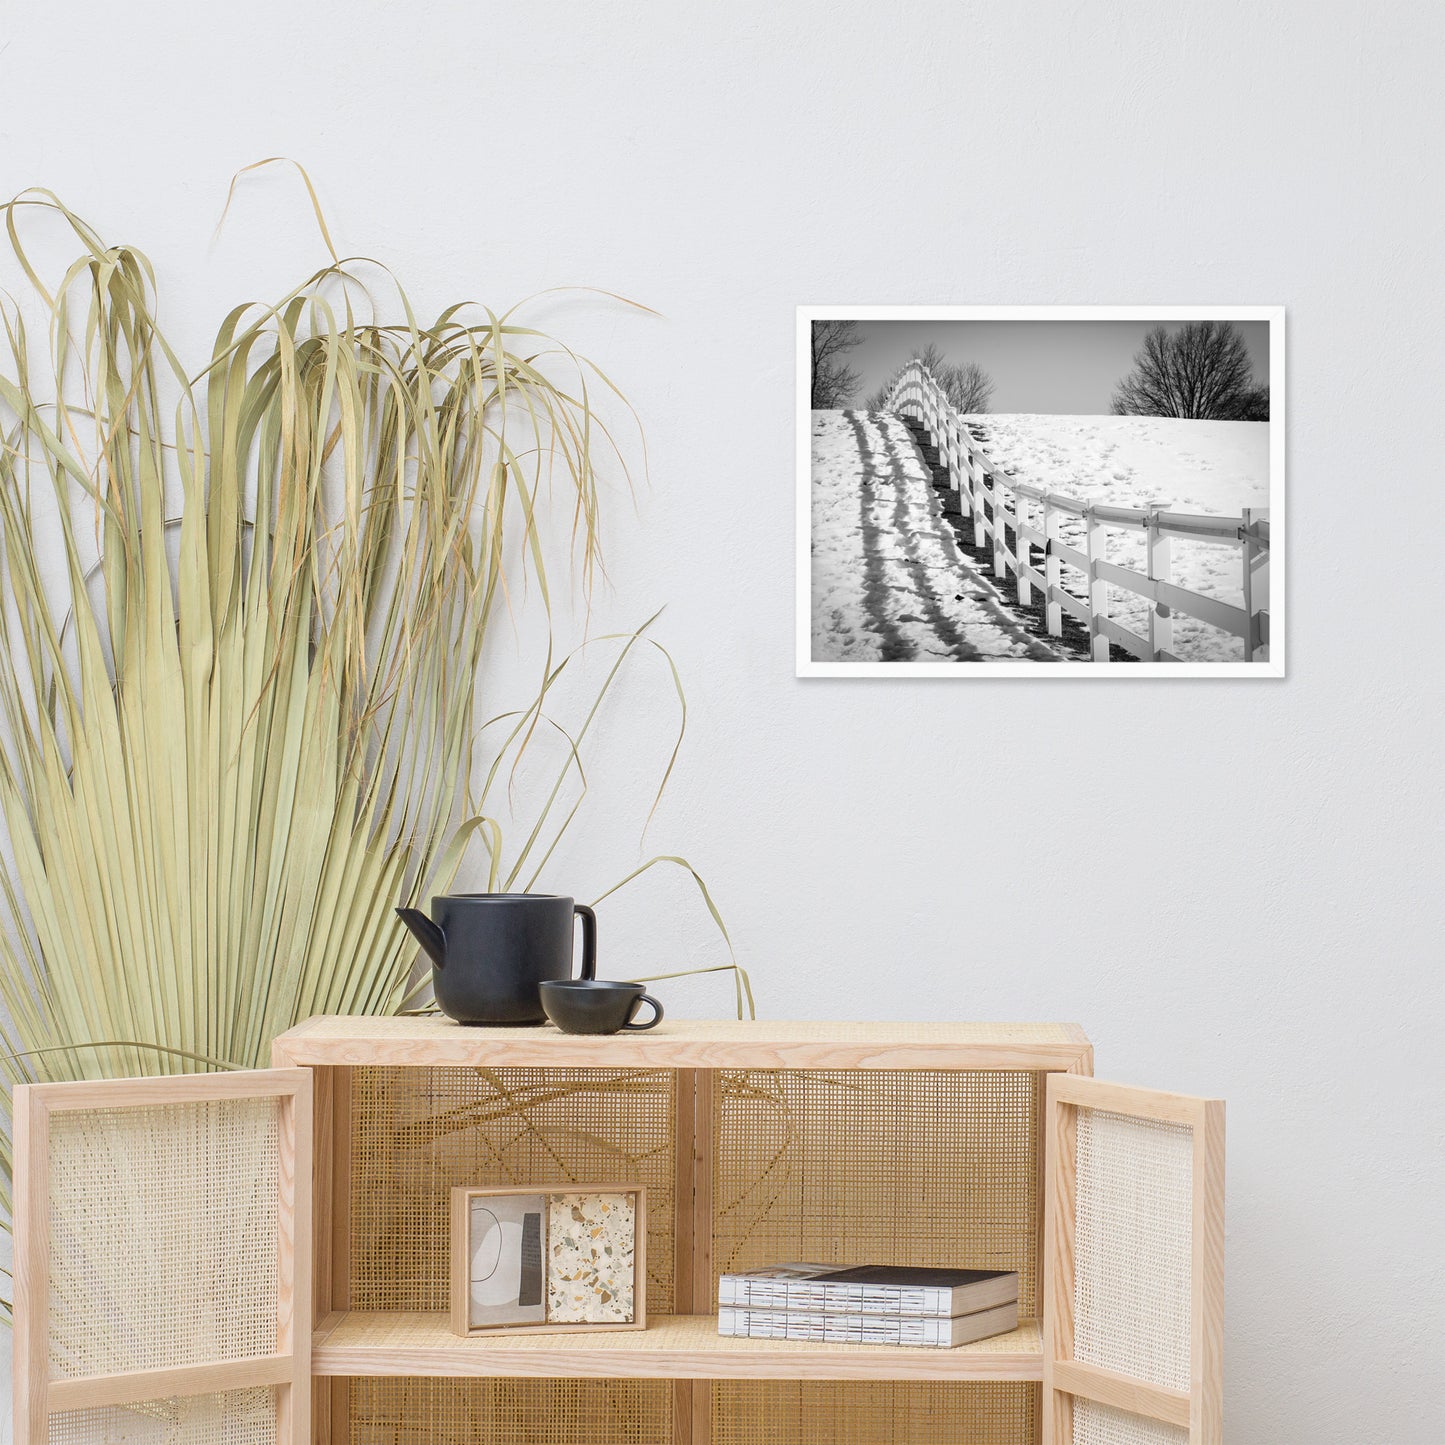 Endless Fences in Black & White Rural Landscape Framed Photo Paper Wall Art Prints